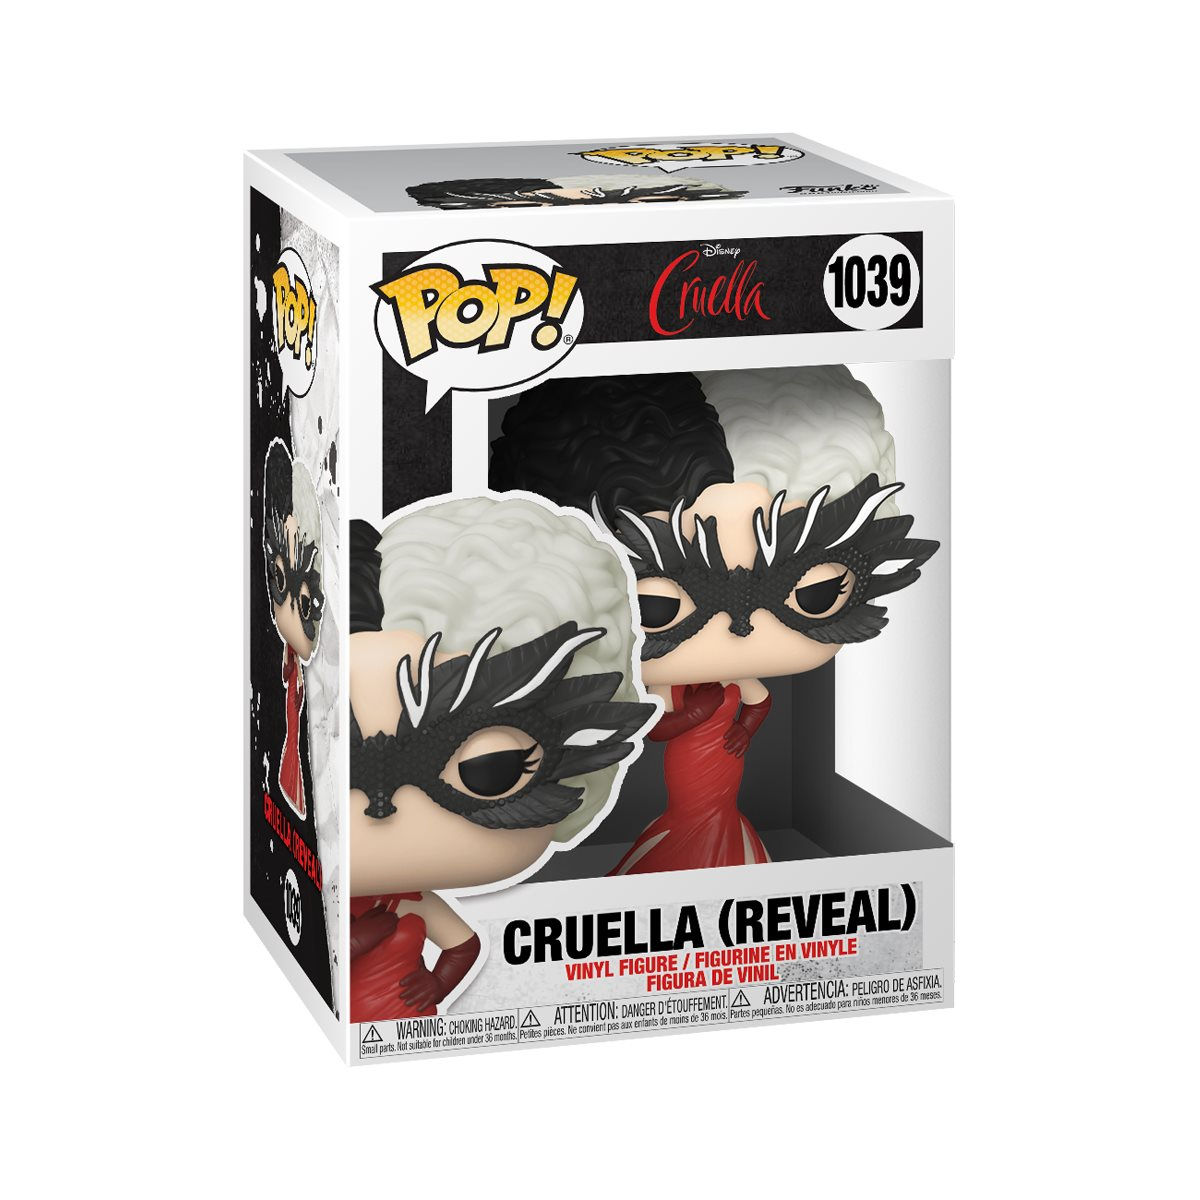 Cruella (Reveal) Funko Pop! Vinyl Figure